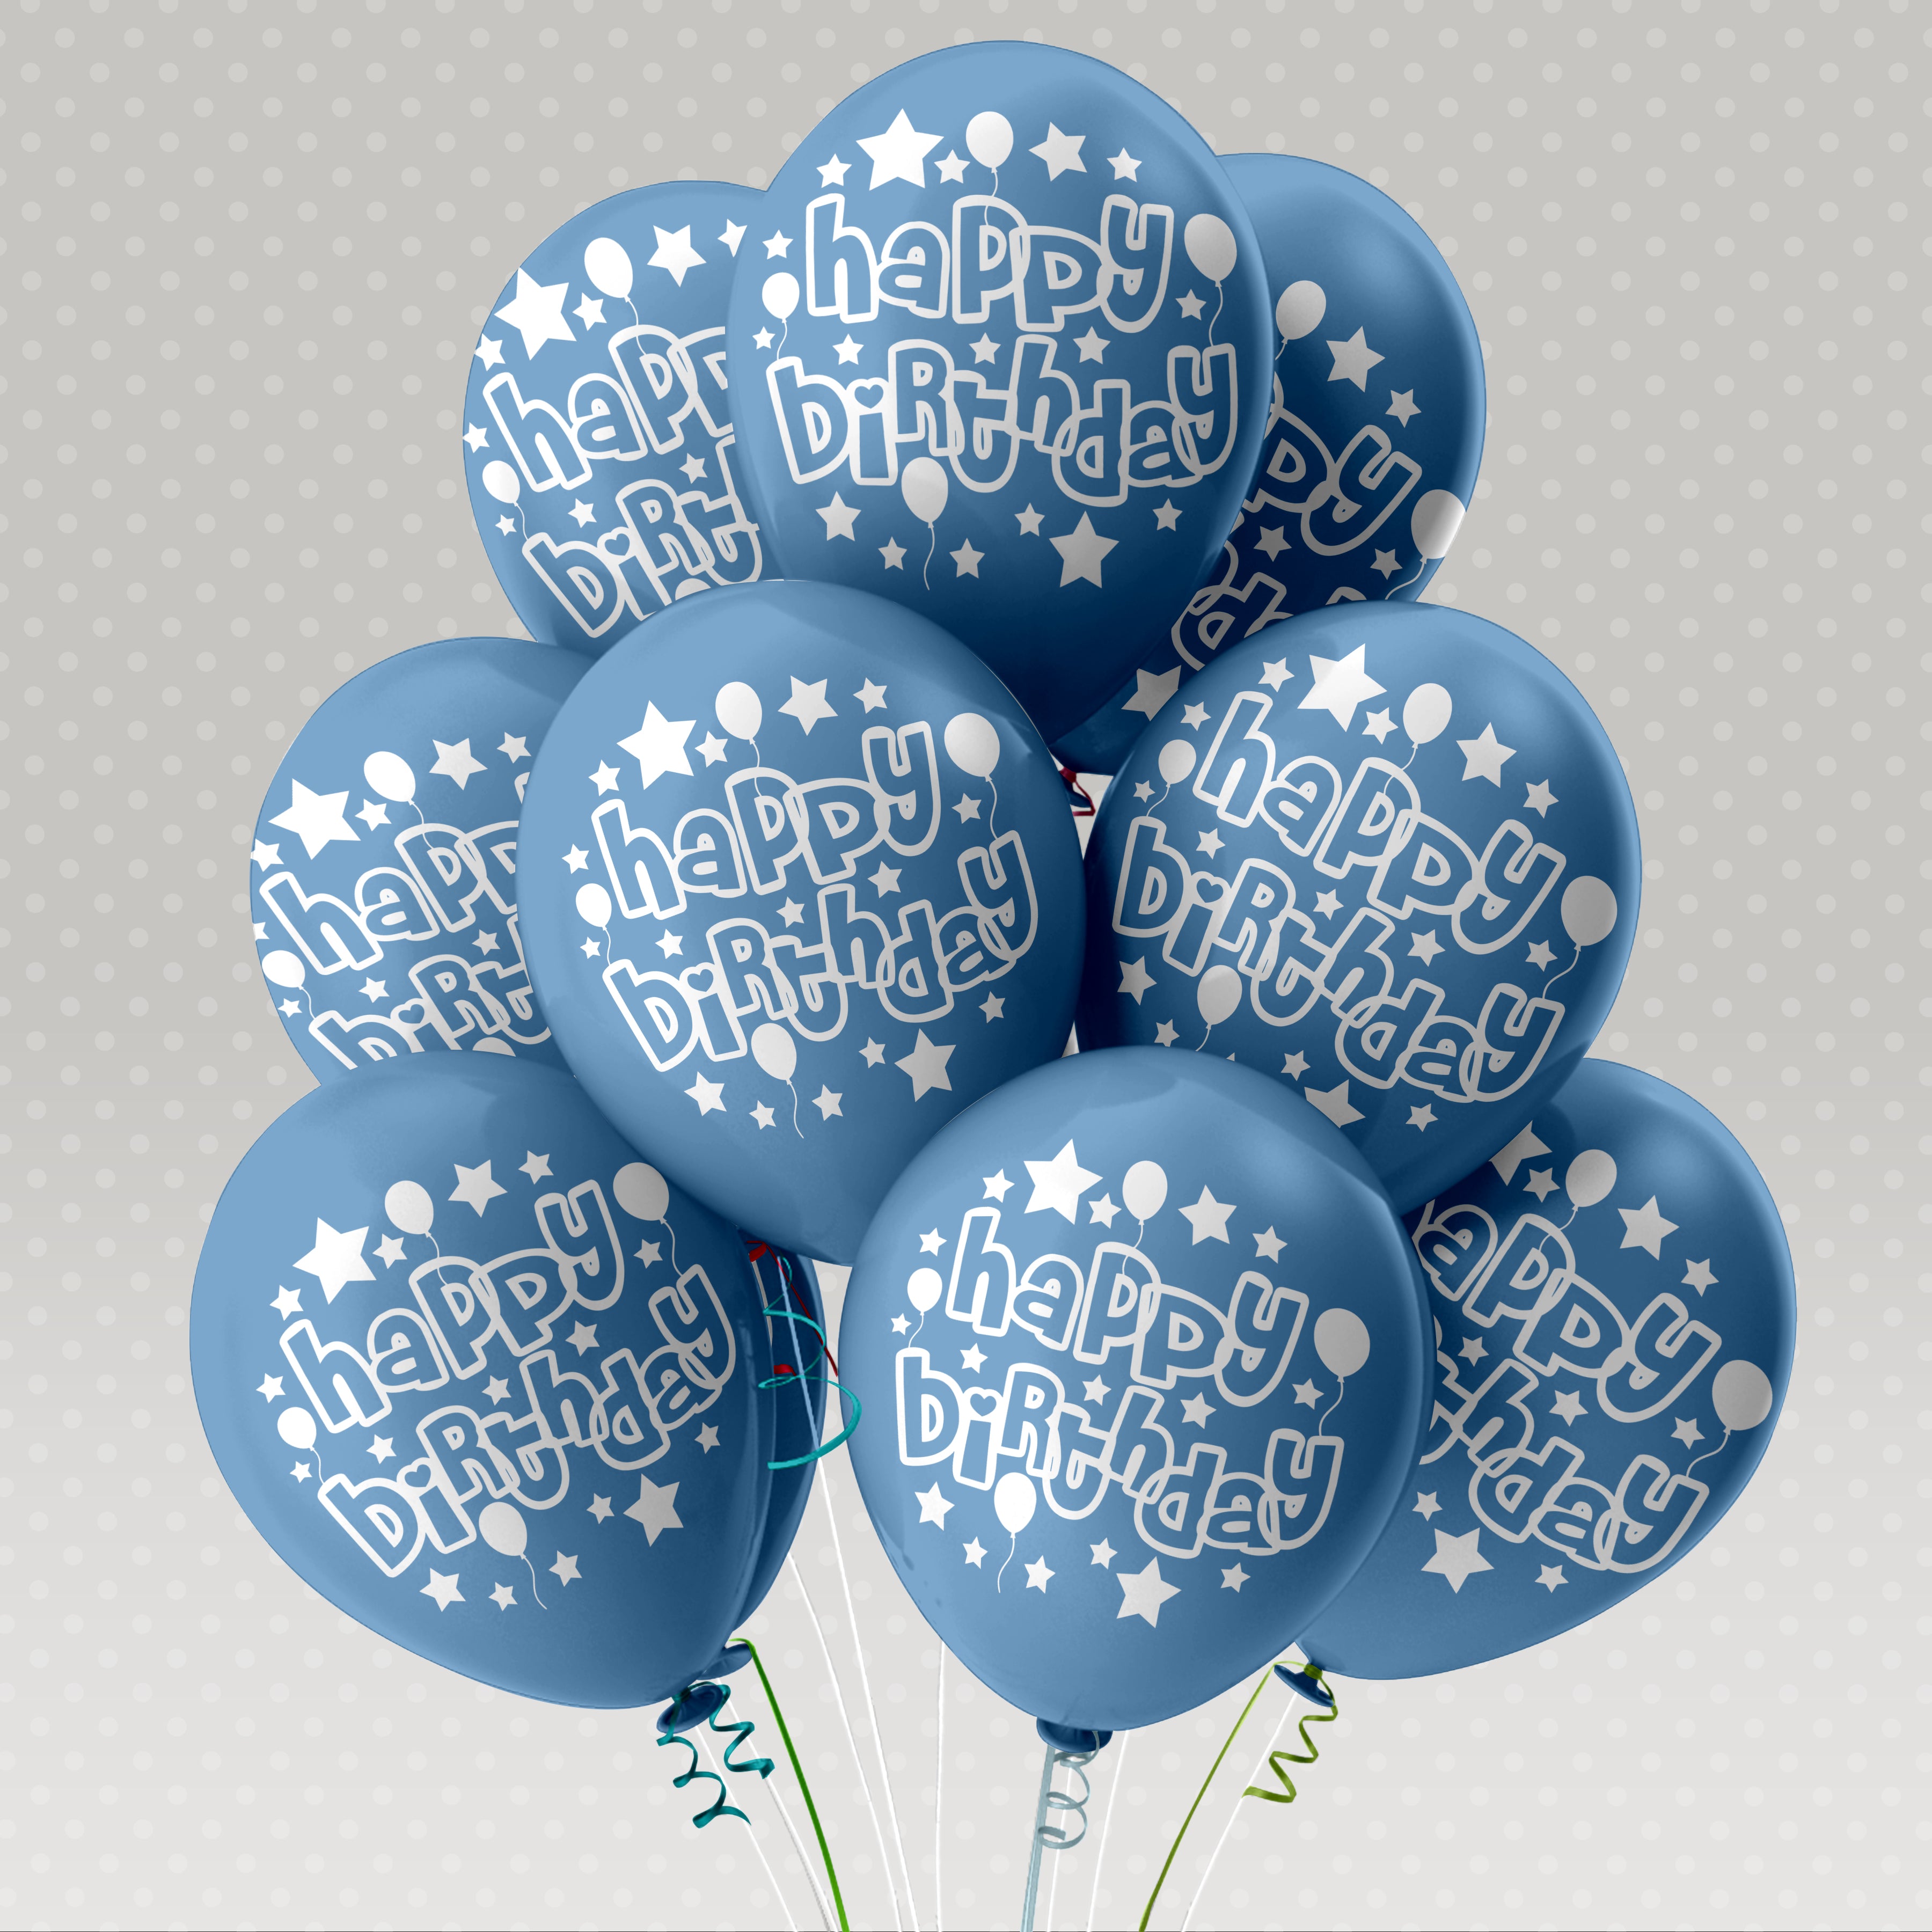 100 x Geburtstag Luftballon, Luftballons Druck, Luftballons mit Geburtstag Motiv.